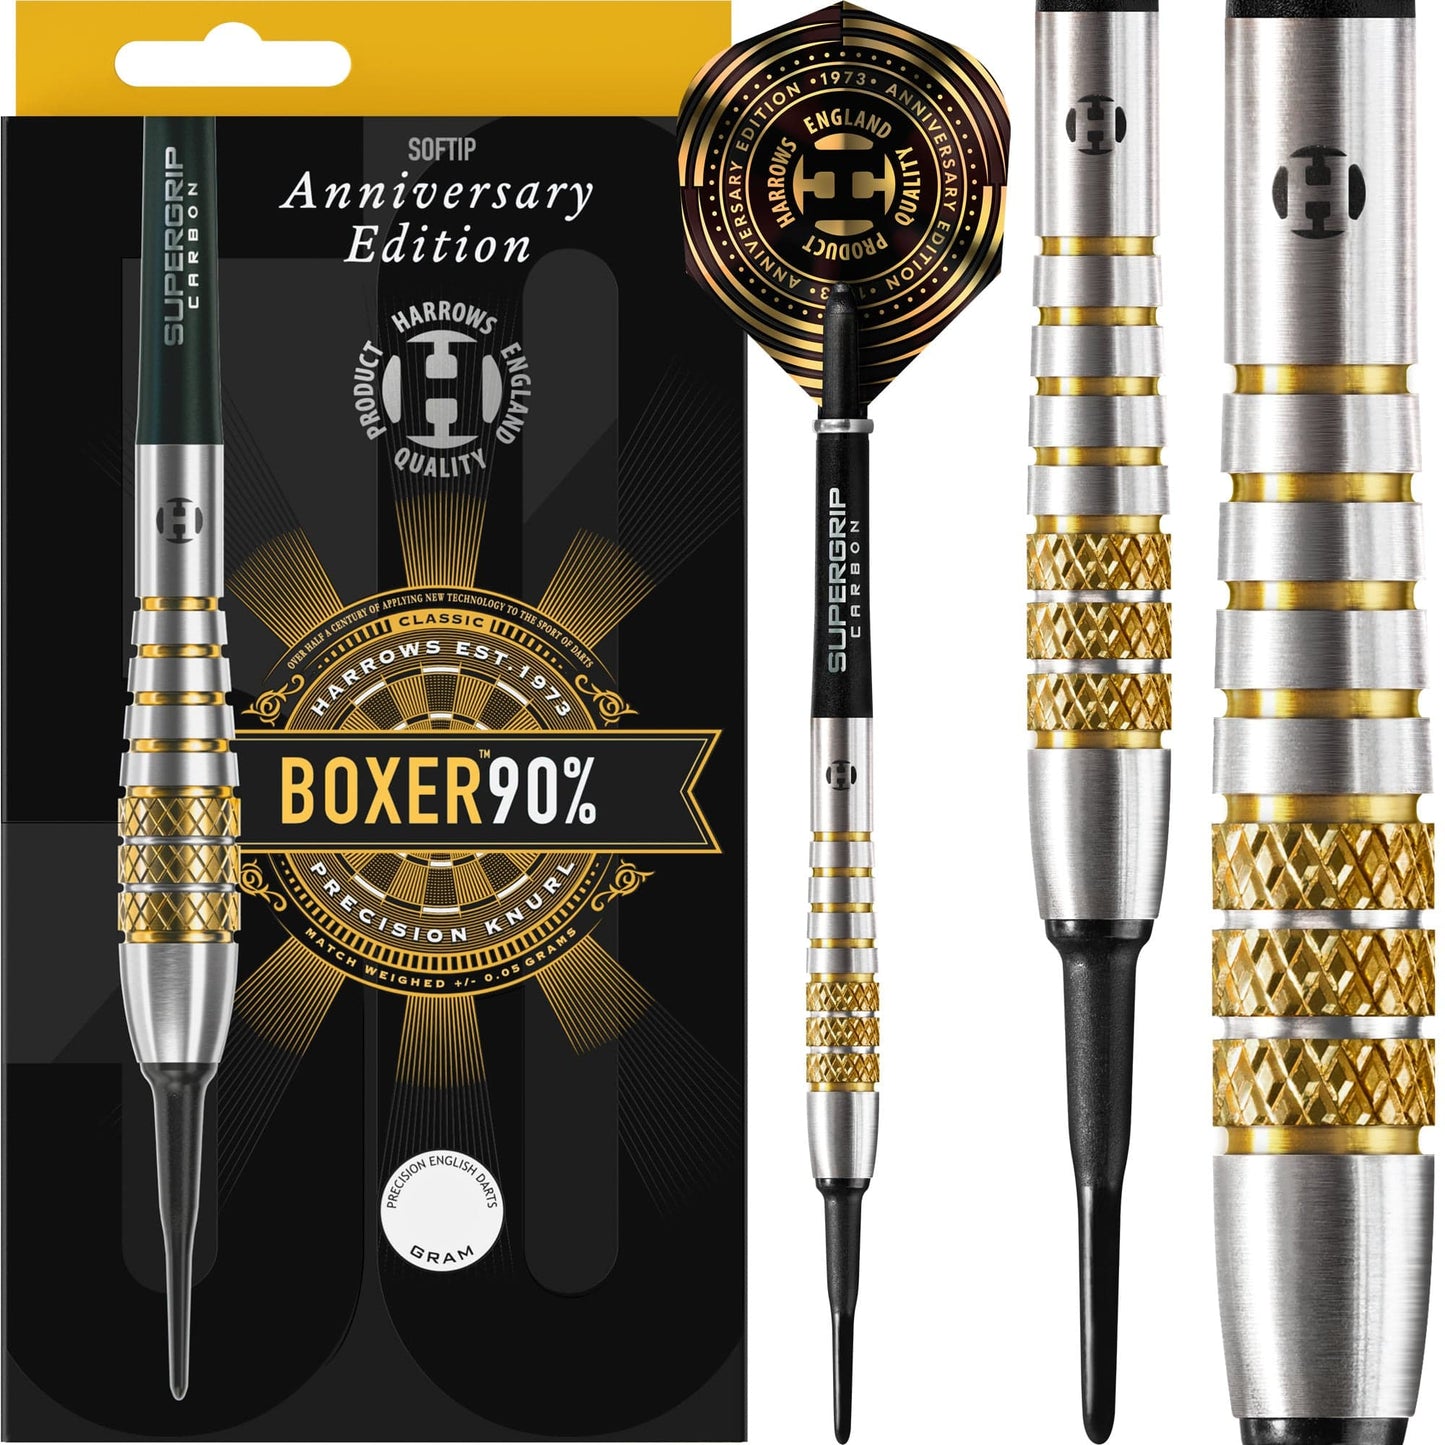 Harrows Boxer Darts - Soft Tip - 90% - Anniversary Edition - Bomb 18g